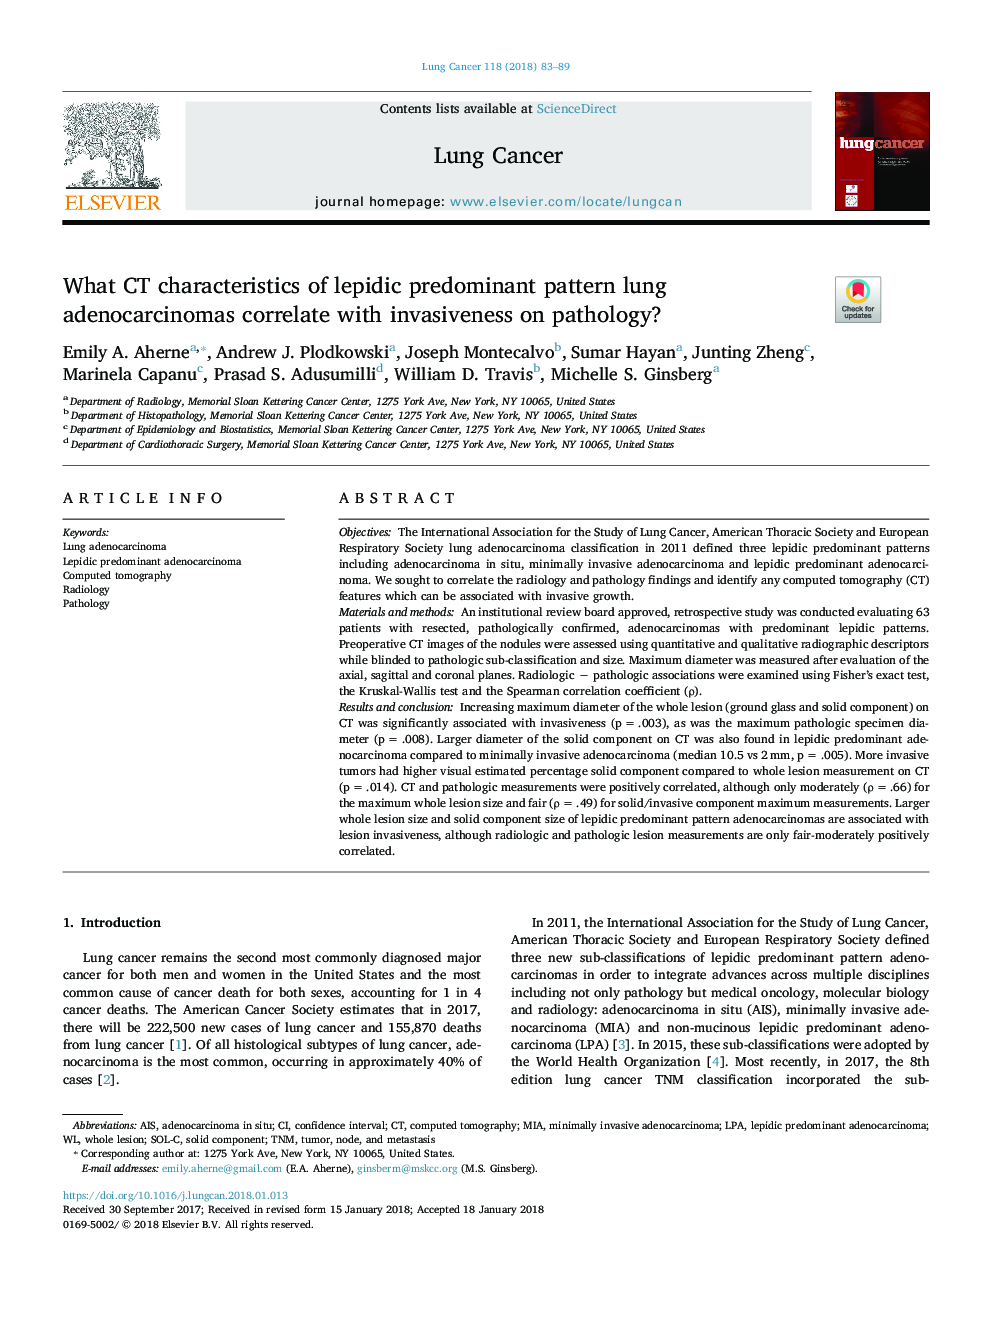 What CT characteristics of lepidic predominant pattern lung adenocarcinomas correlate with invasiveness on pathology?